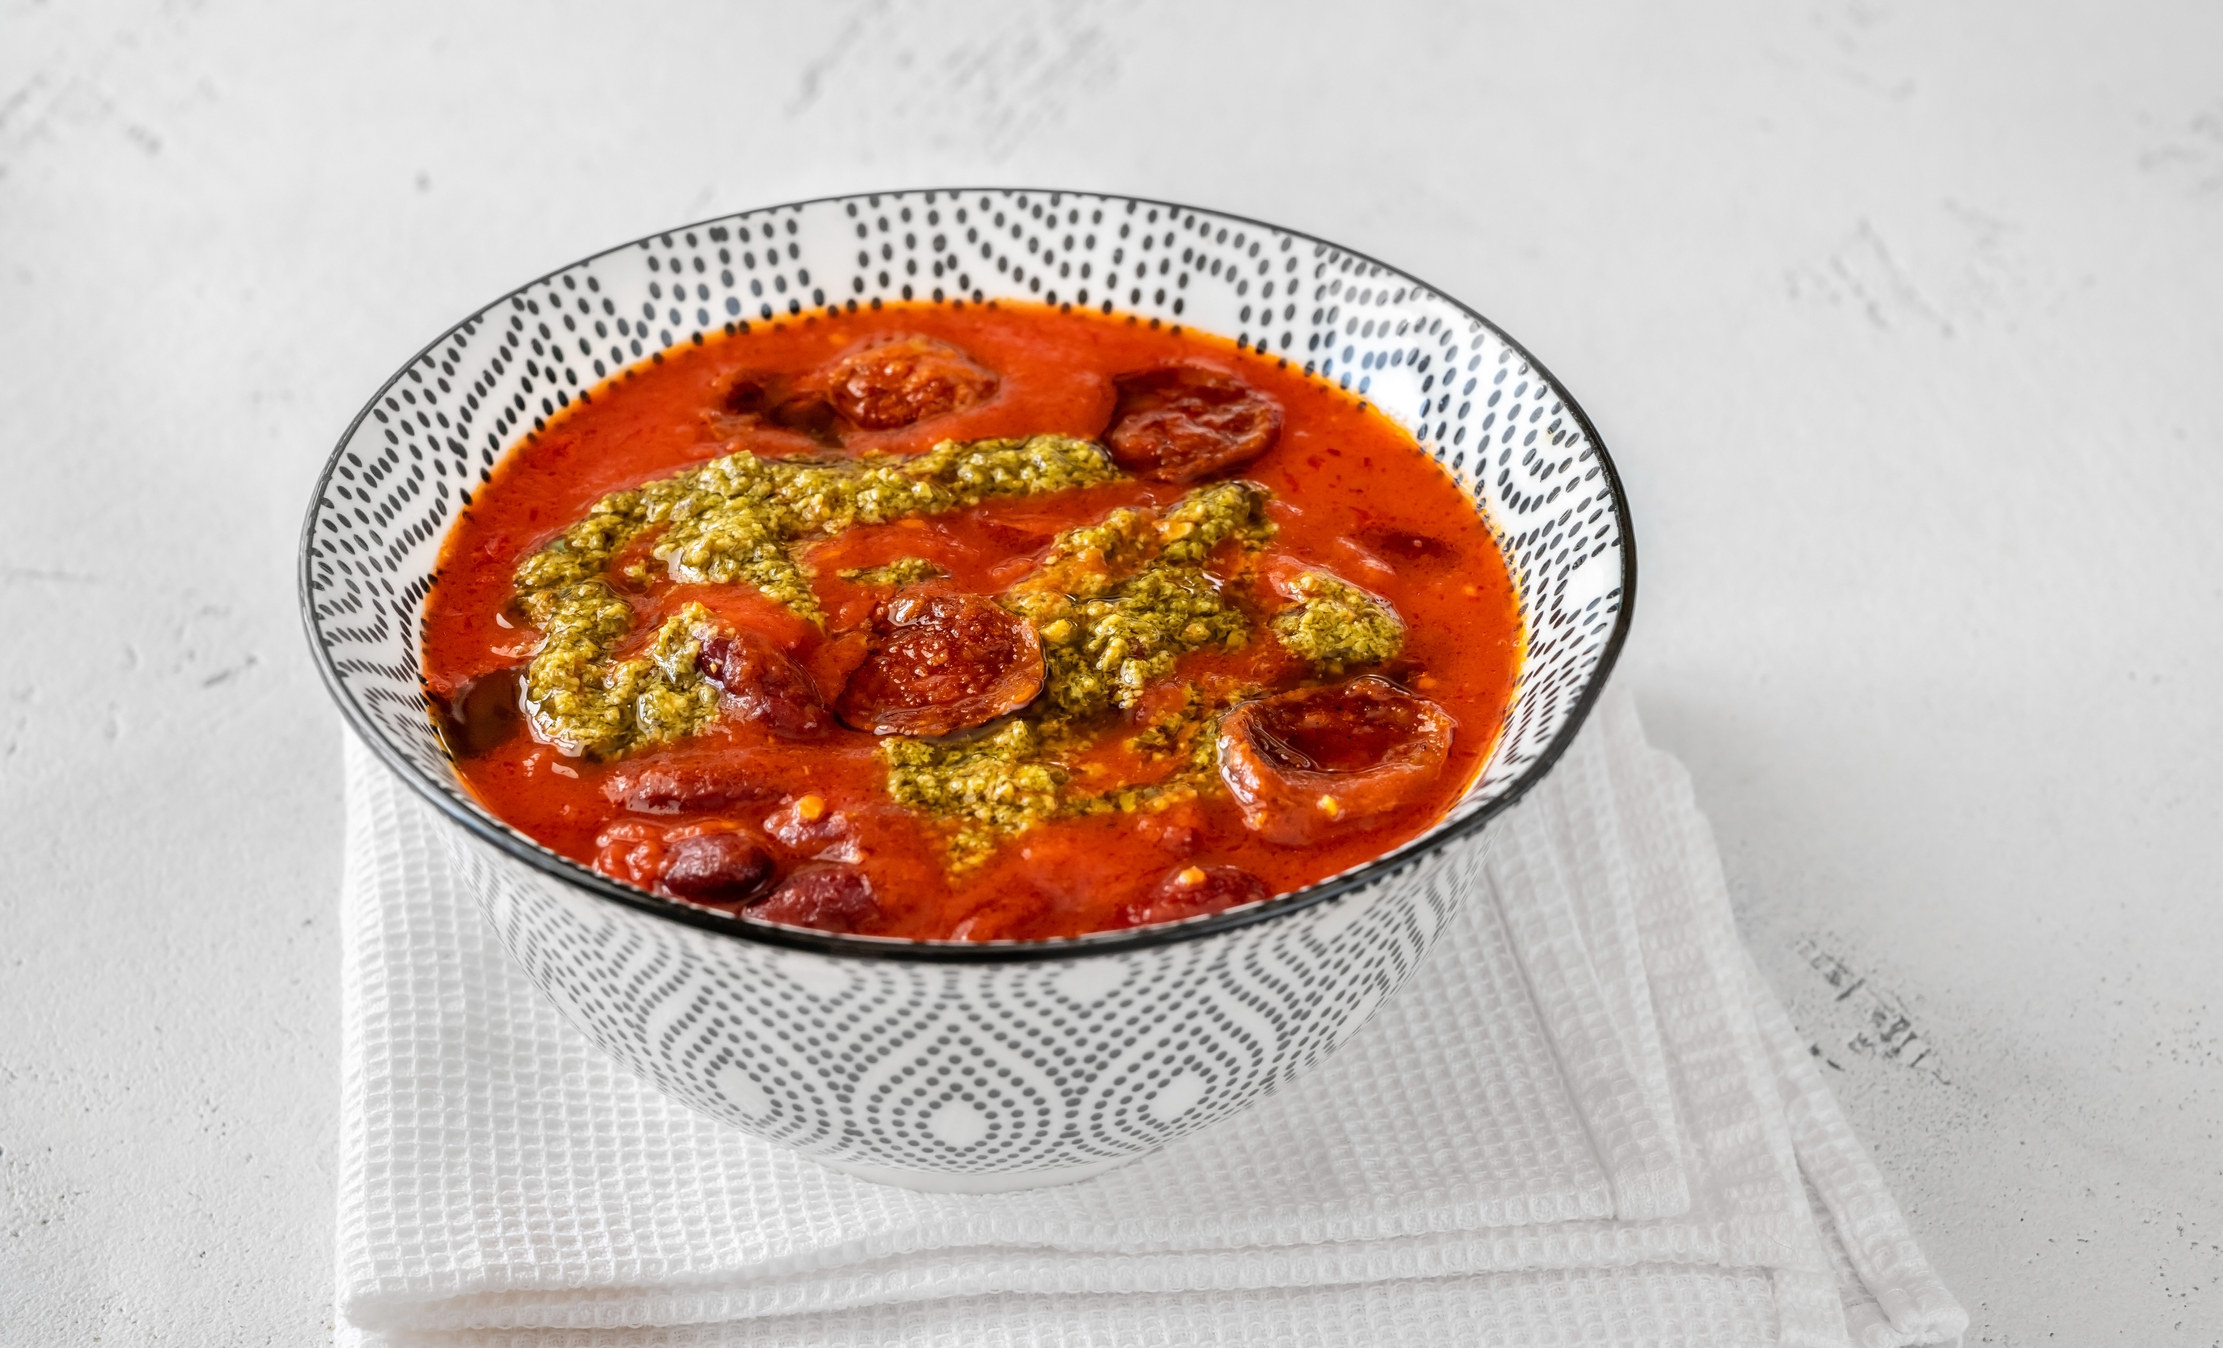 A bowl of tomato soup with pesto